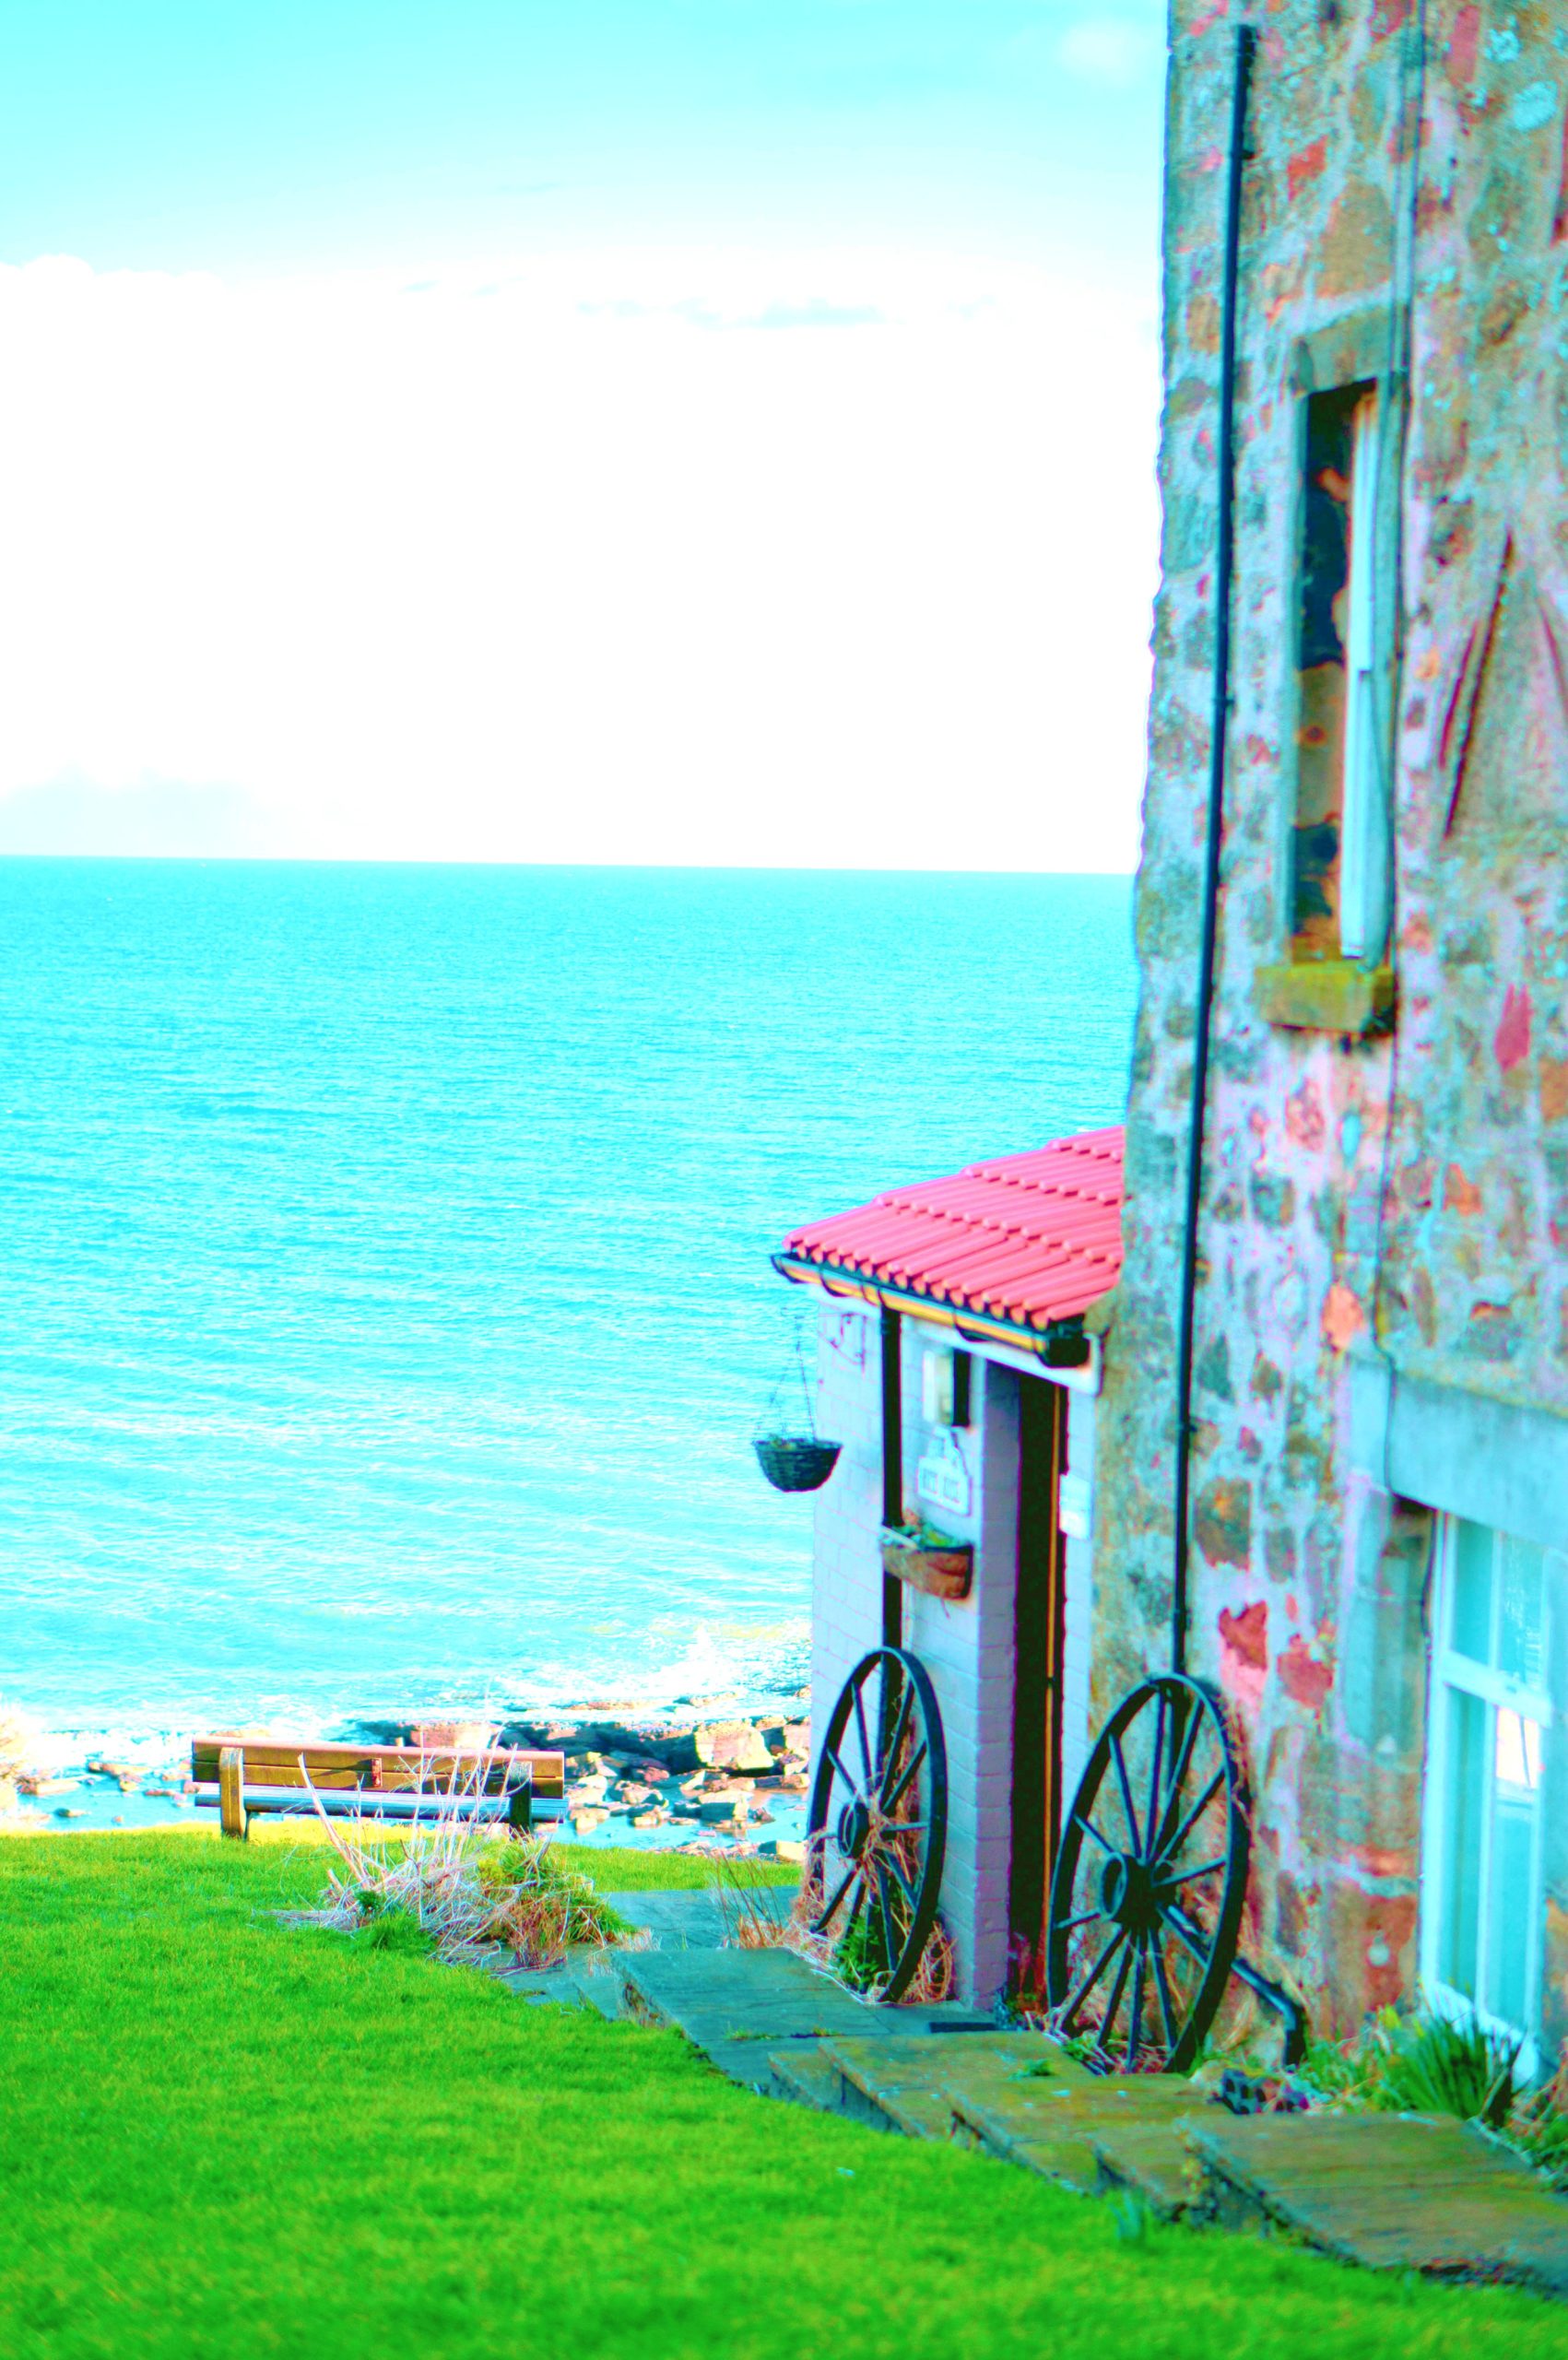 <img src="quaint.jpg" alt="quaint house by the sea"/> 